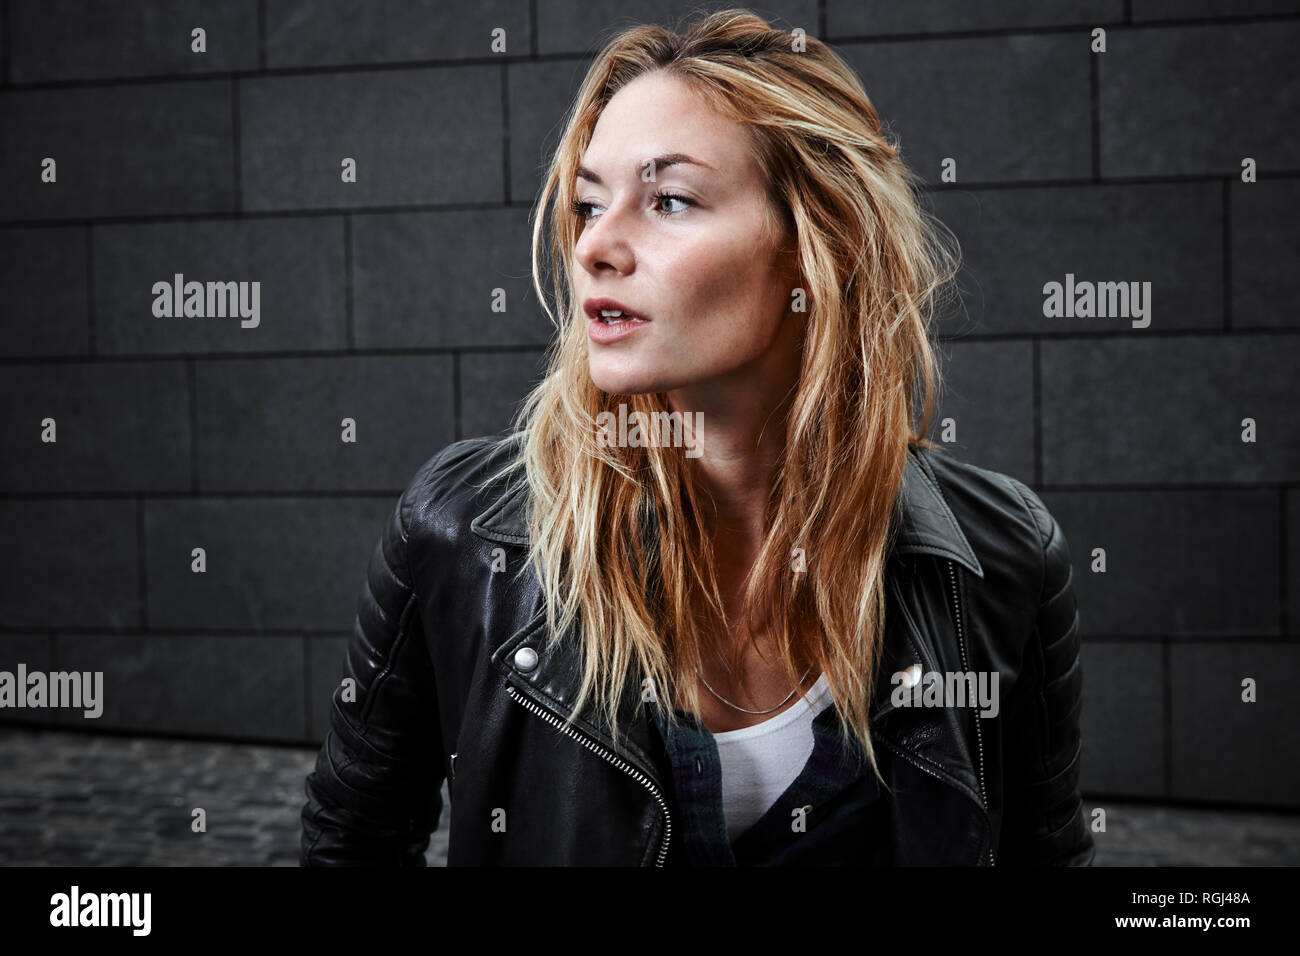 Confident young woman wearing biker jacket looking away Stock Photo